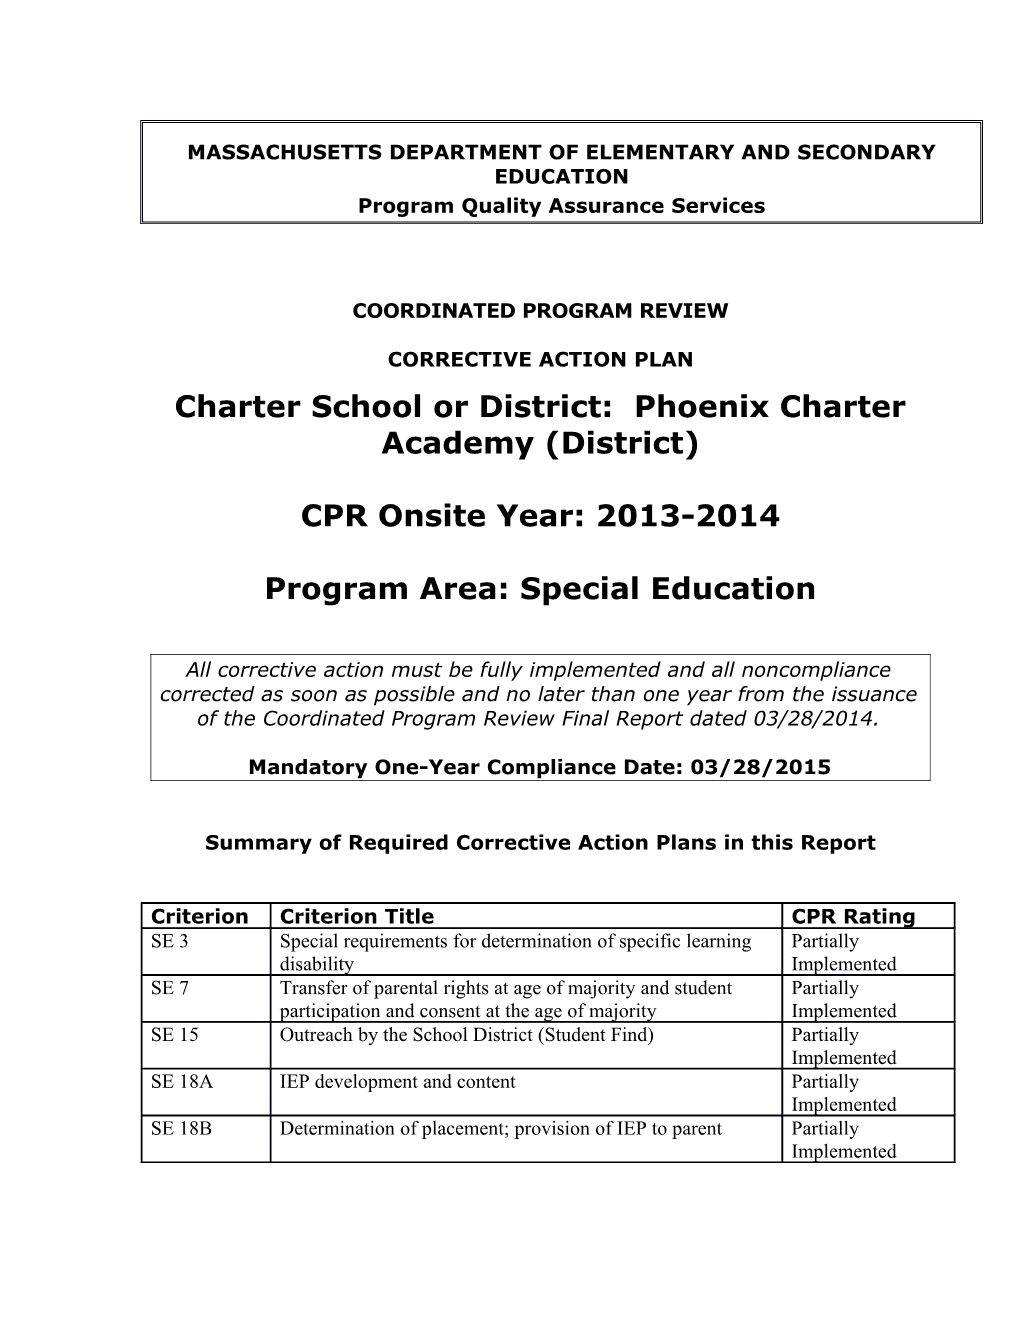 Phoenix Charter Academy CAP 2014